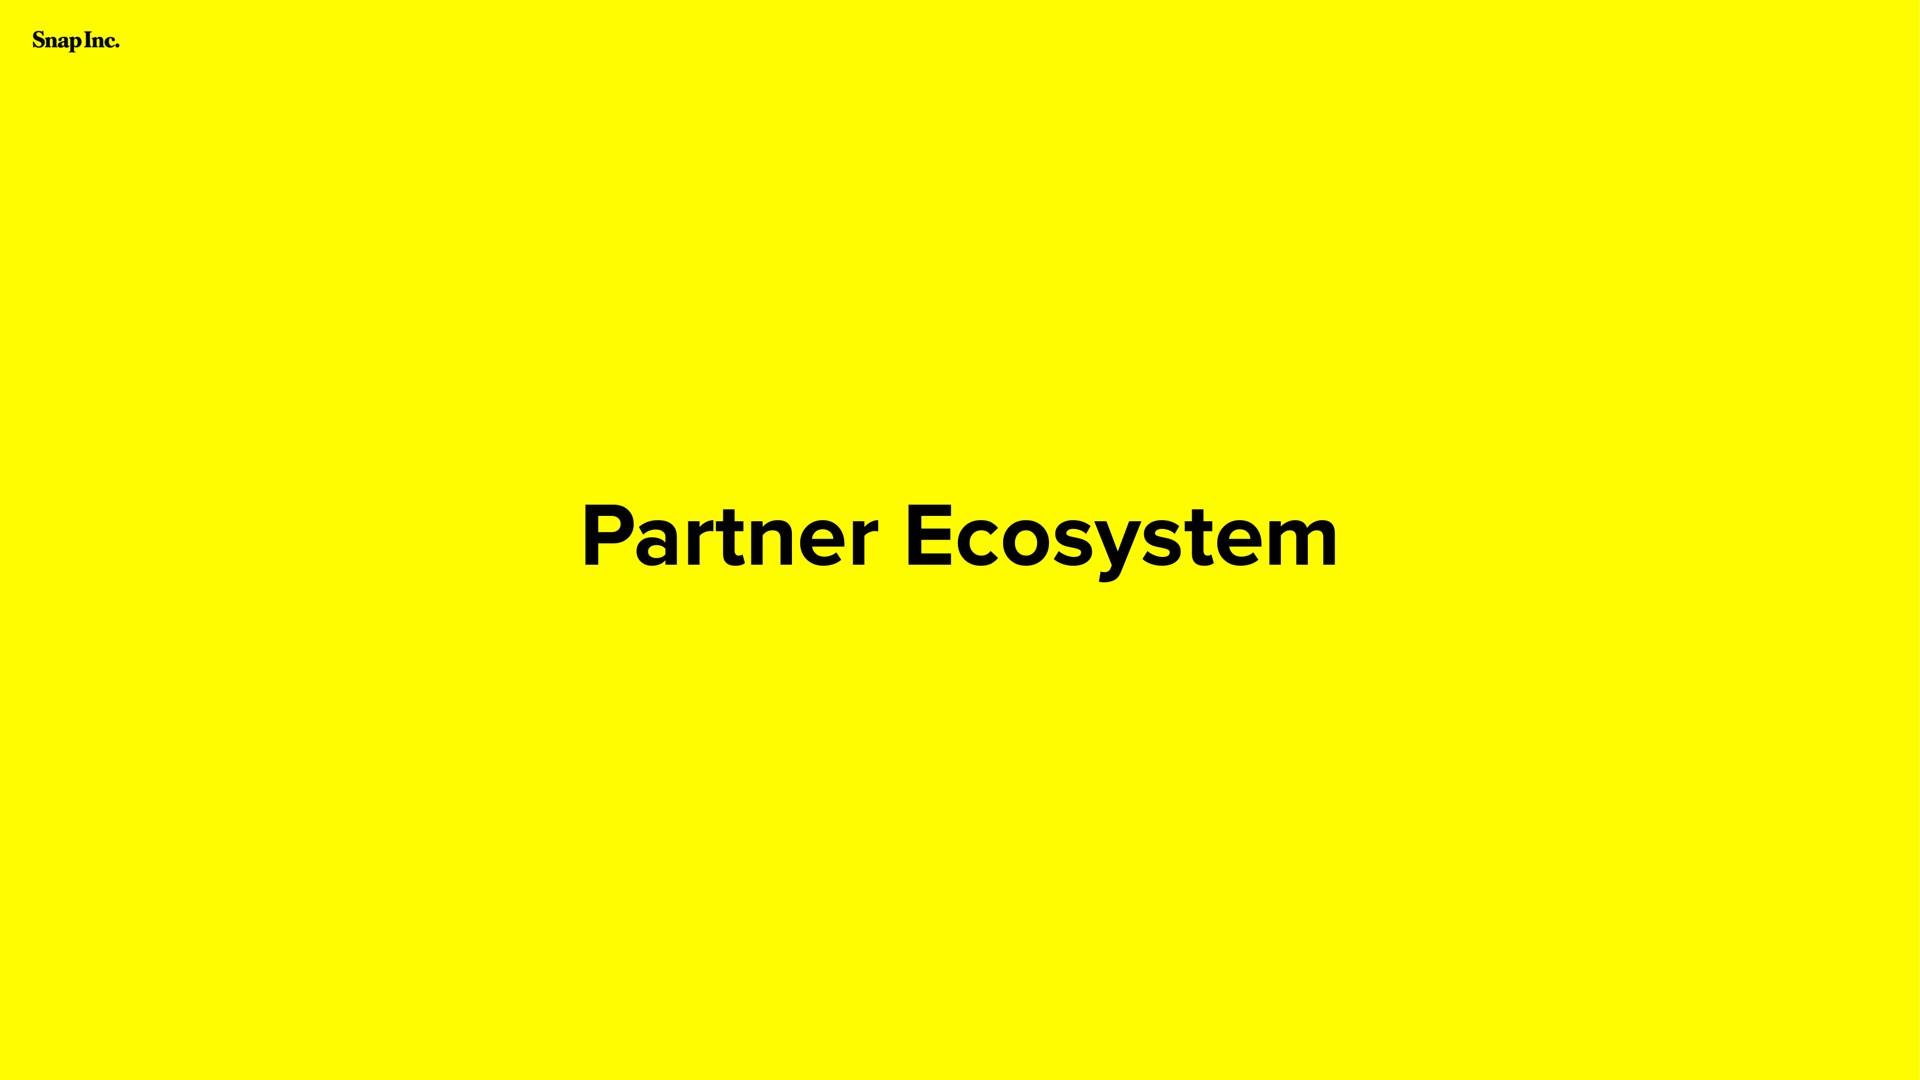 partner ecosystem | Snap Inc